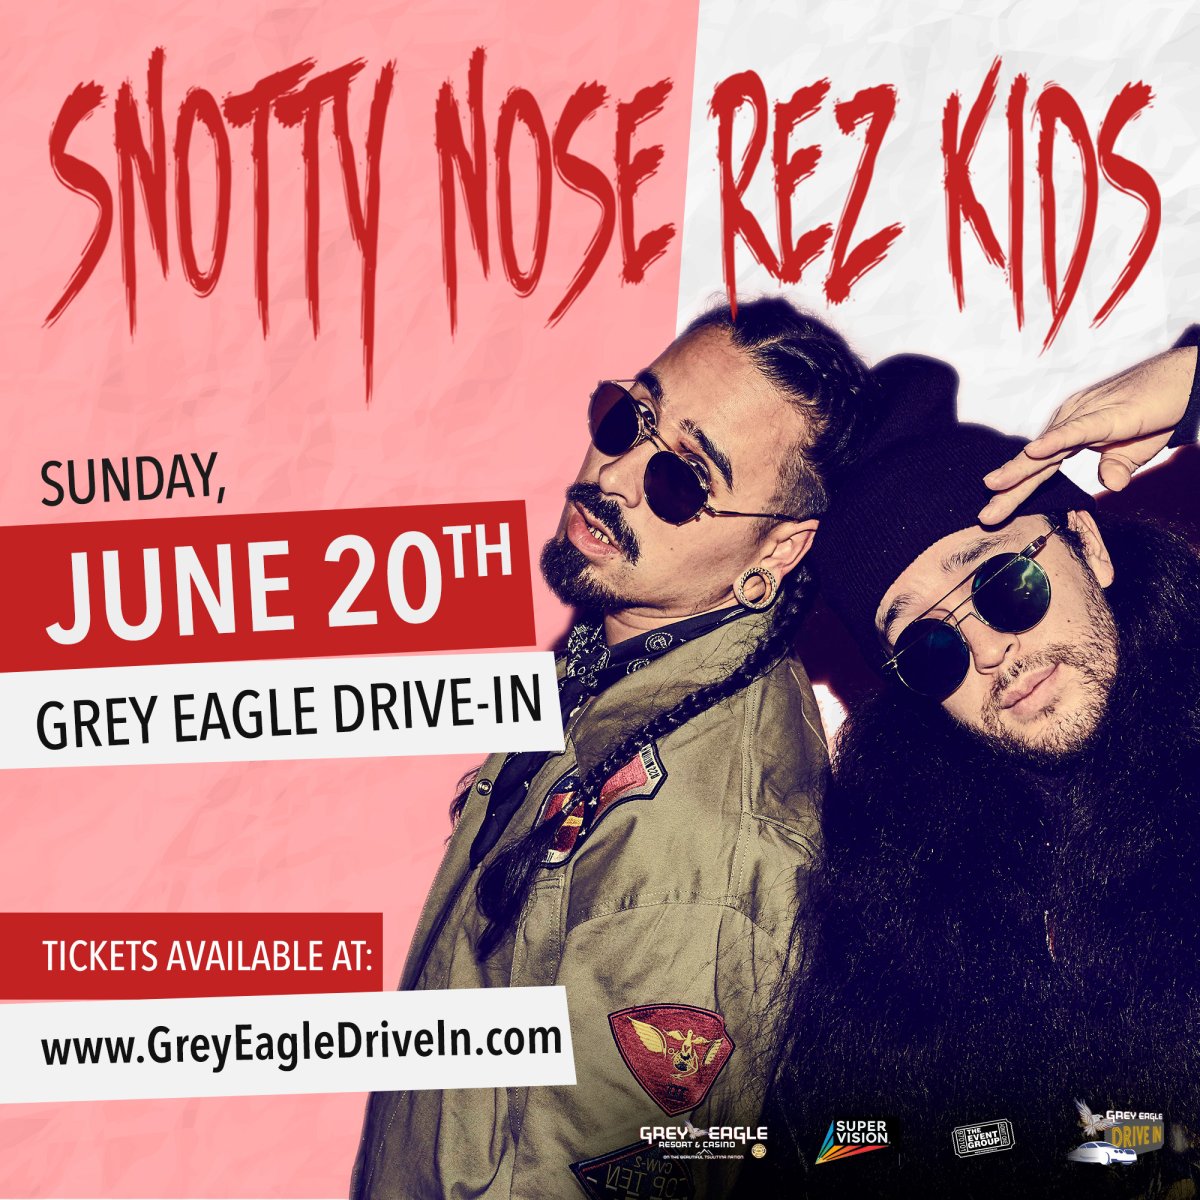 Grey Eagle Drive In: Snotty Nose Rez Kids - image